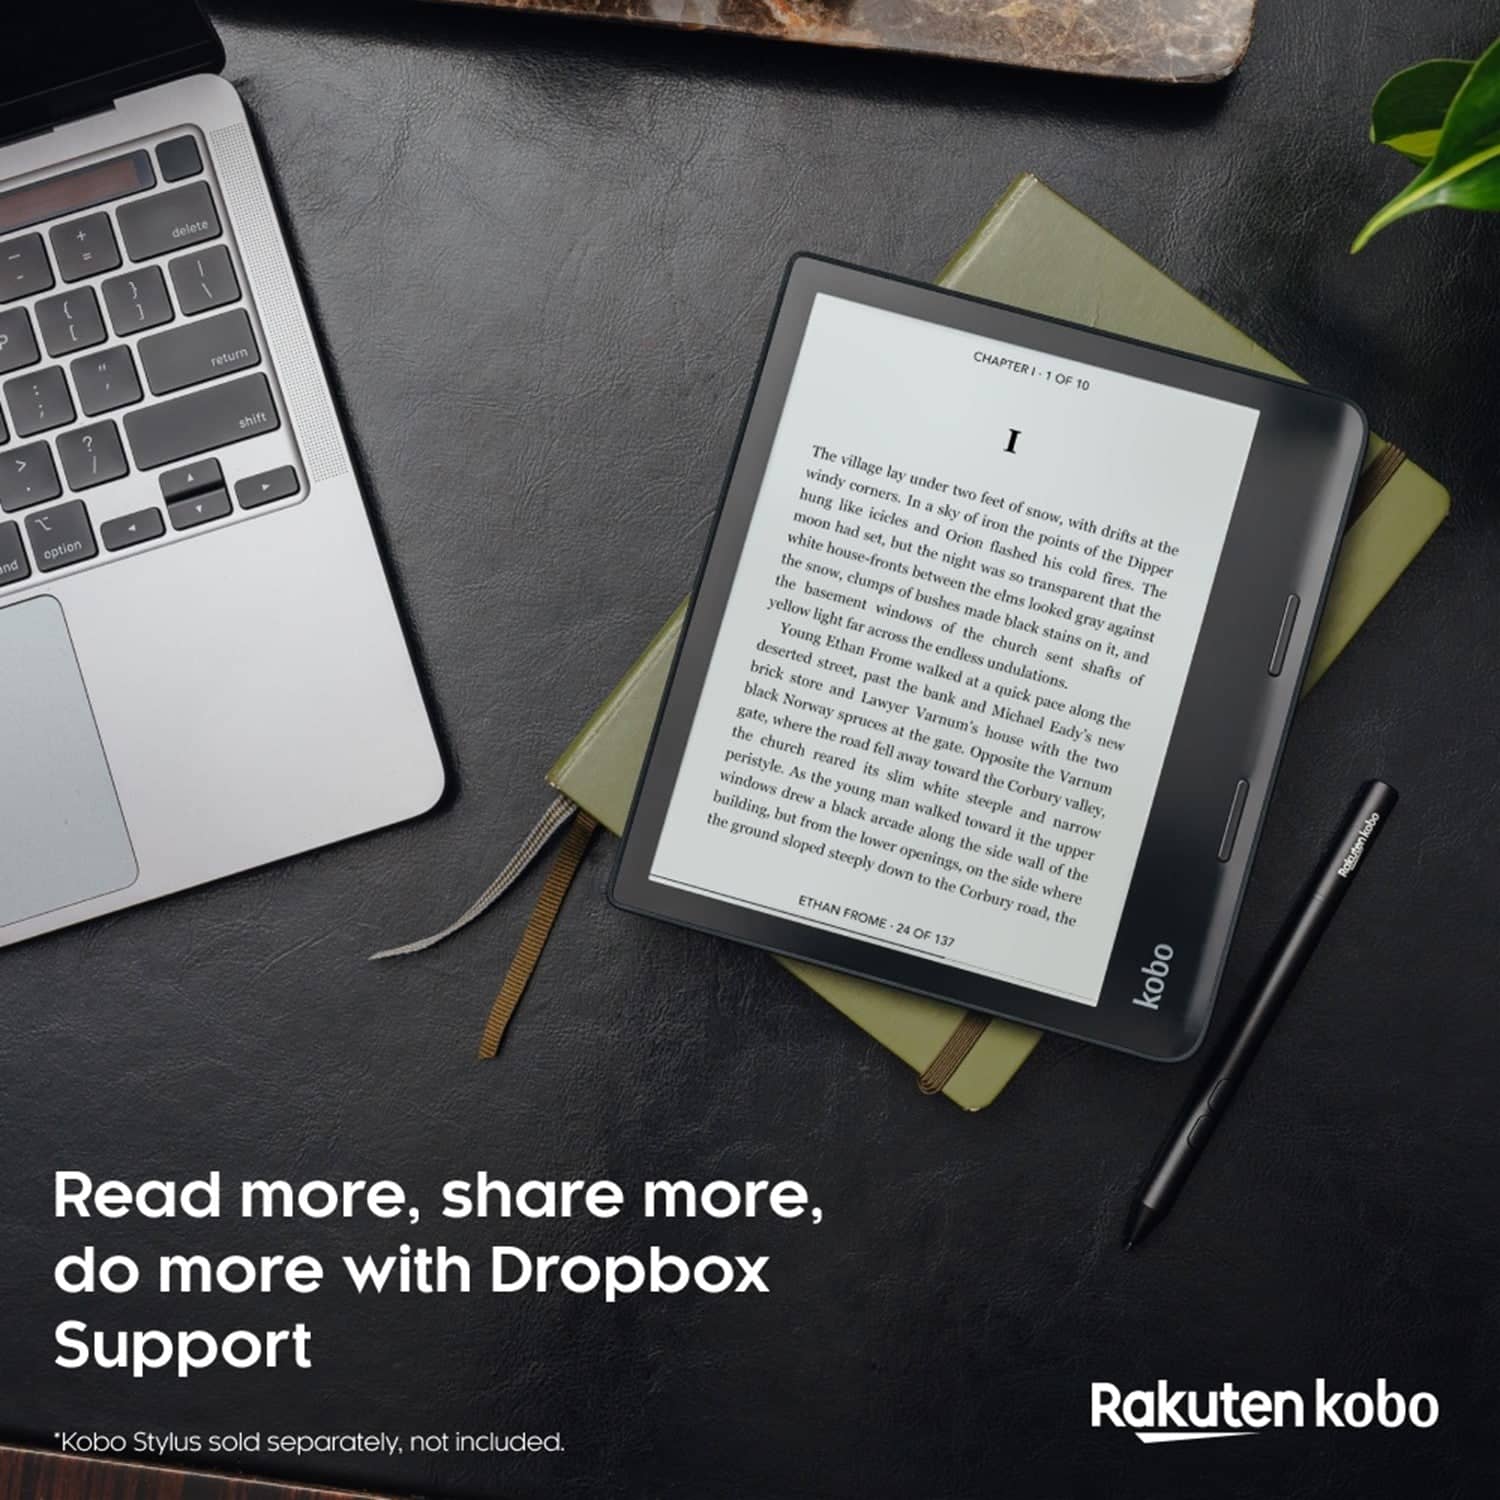 Kobo Sage E-Reader